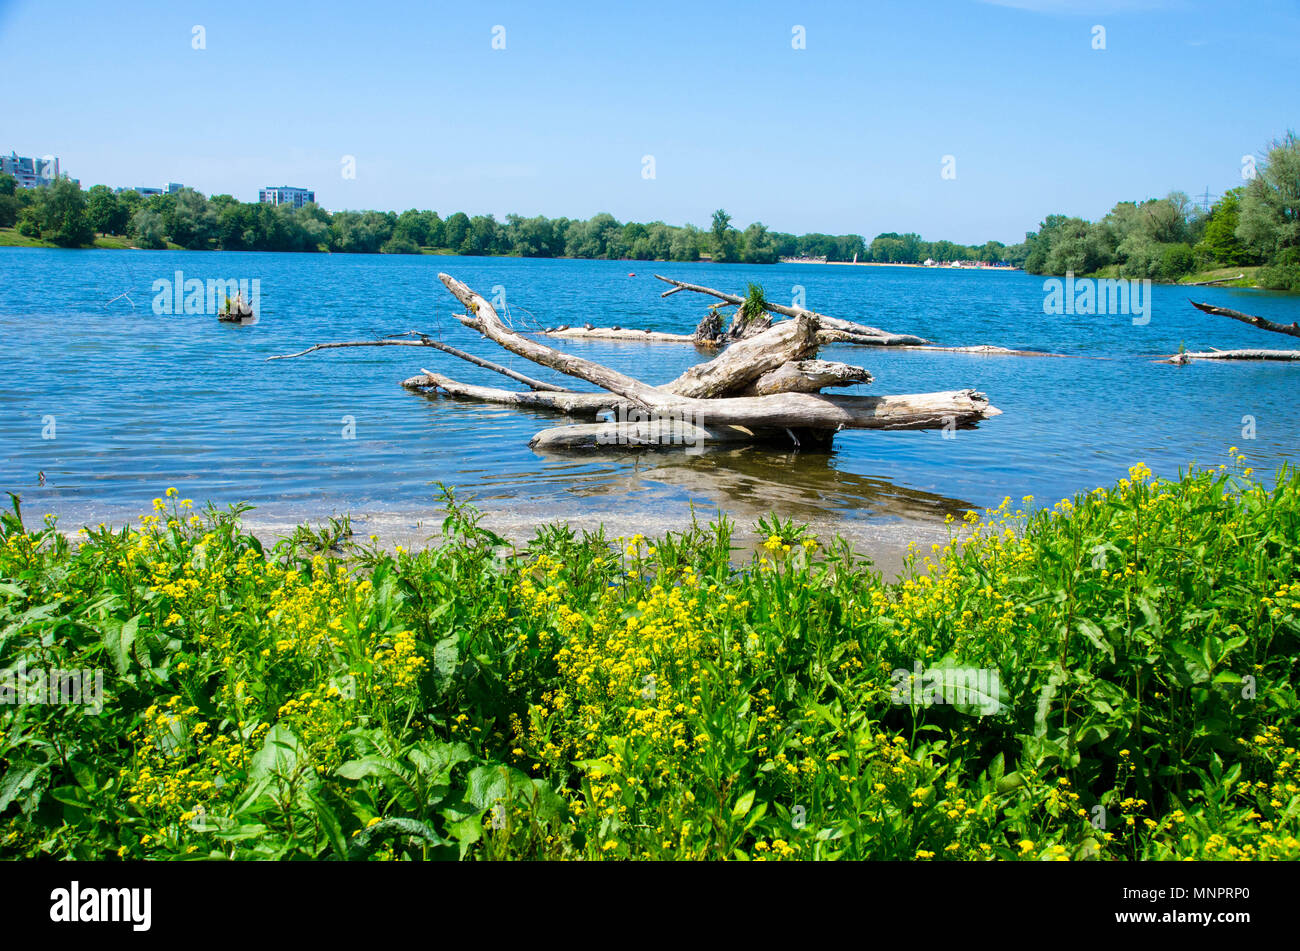 Gifiz lake in Offenburg in Germany Stock Photo - Alamy